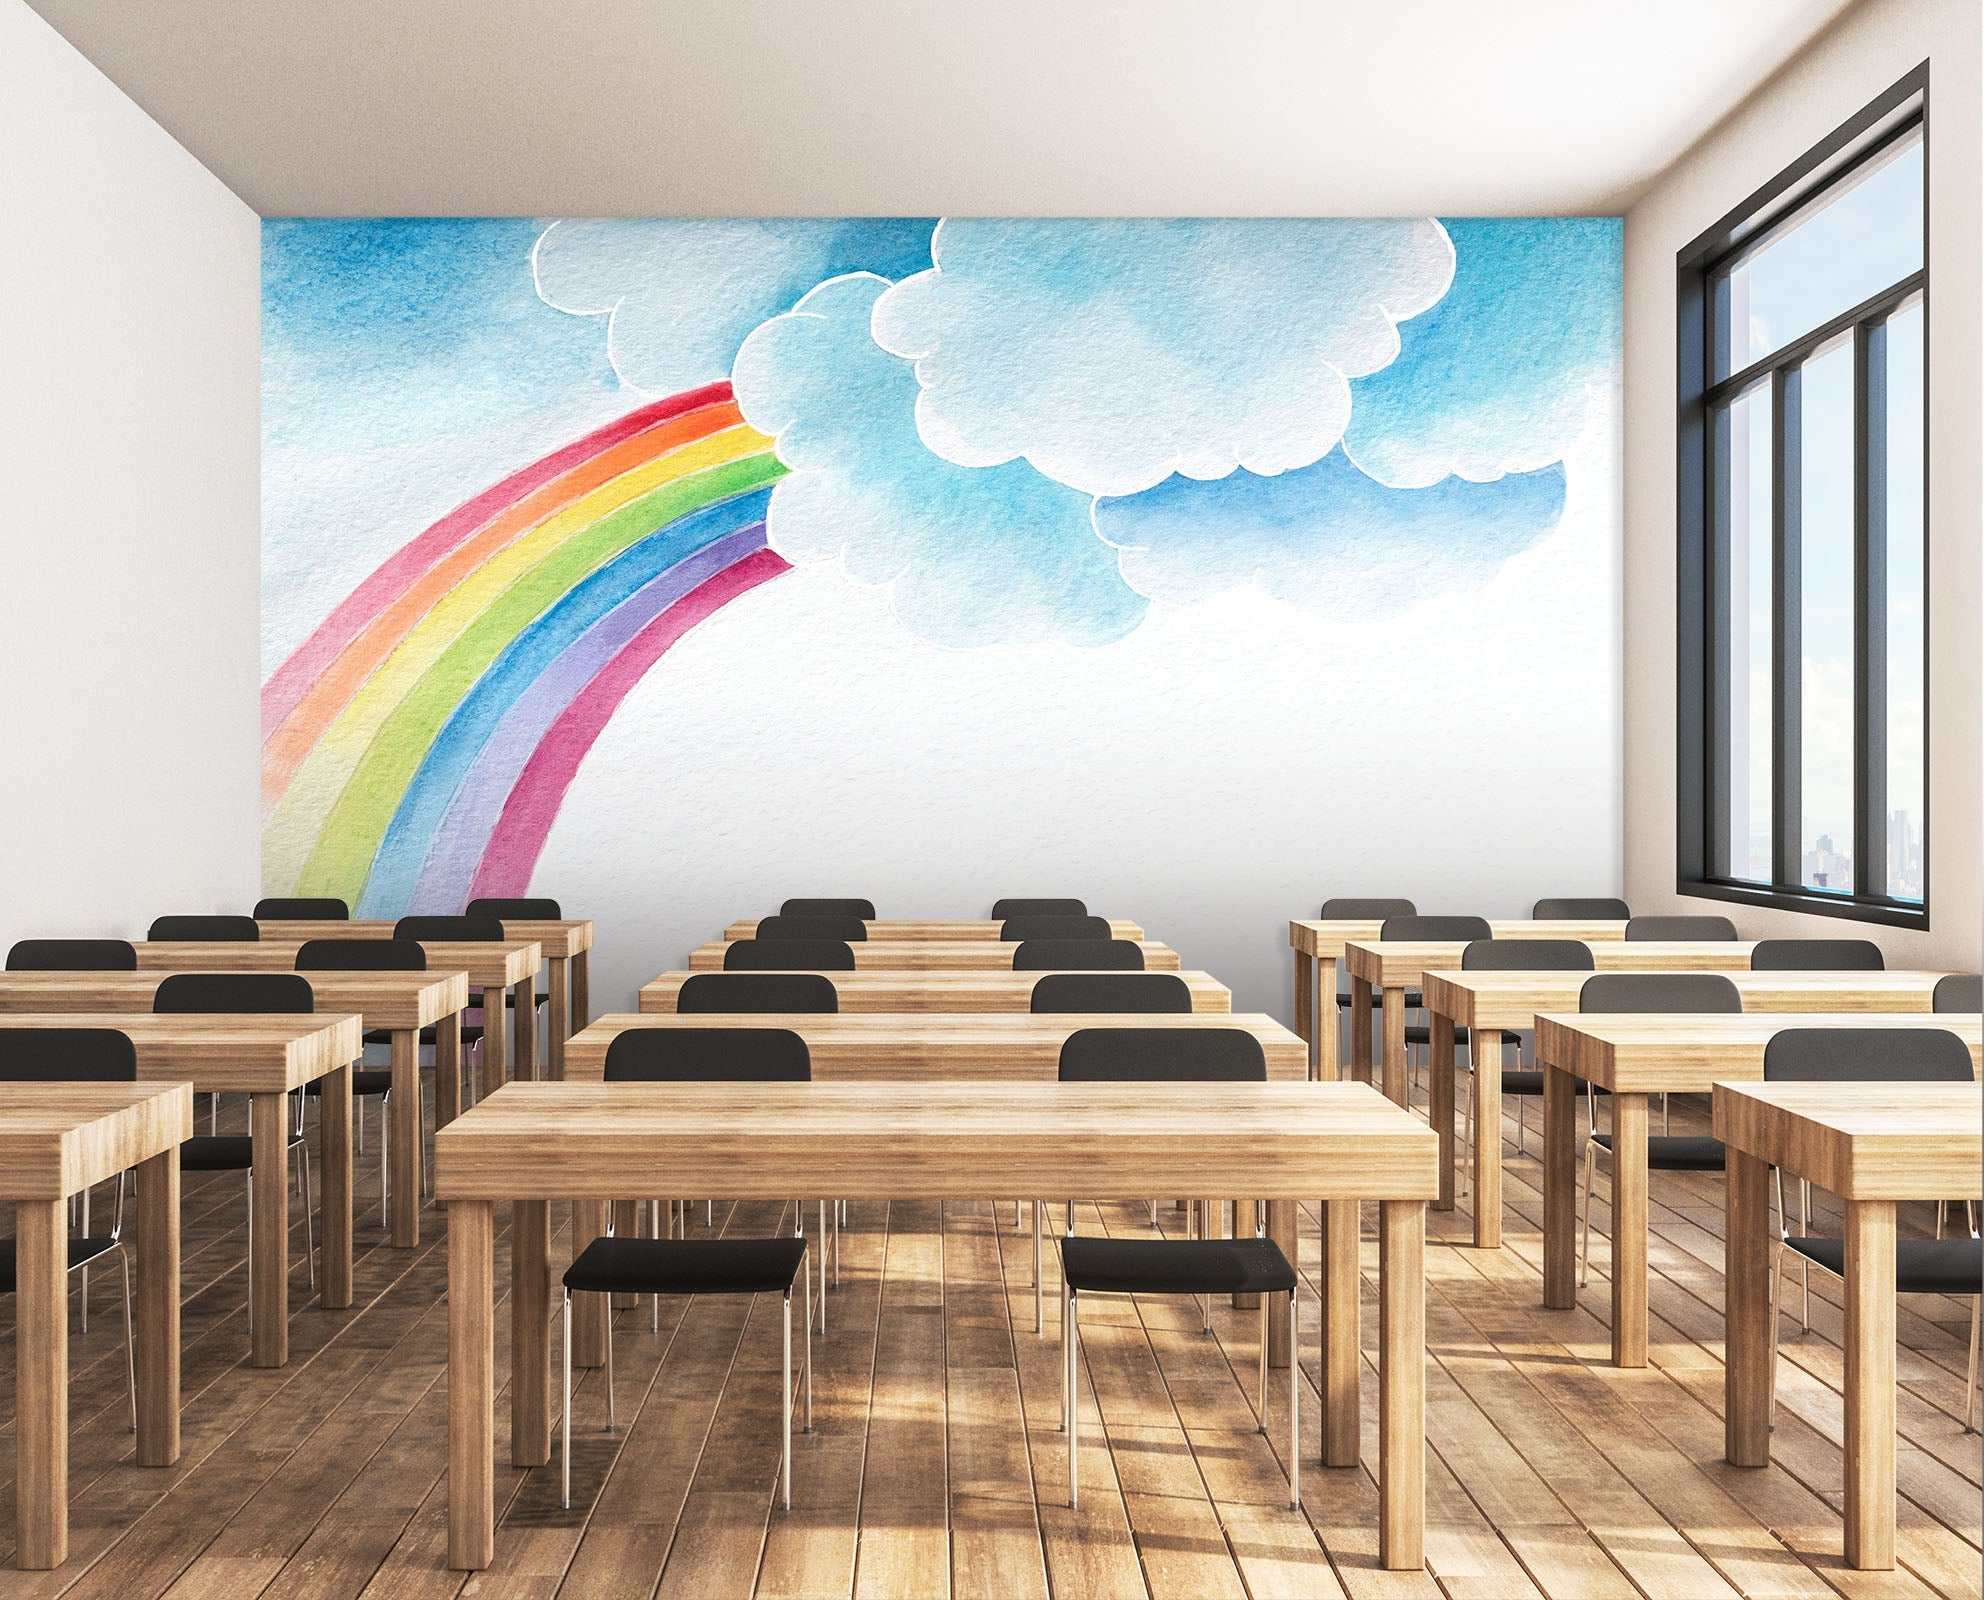 3D Cartoon Rainbow 177 Wall Murals Wallpaper AJ Wallpaper 2 